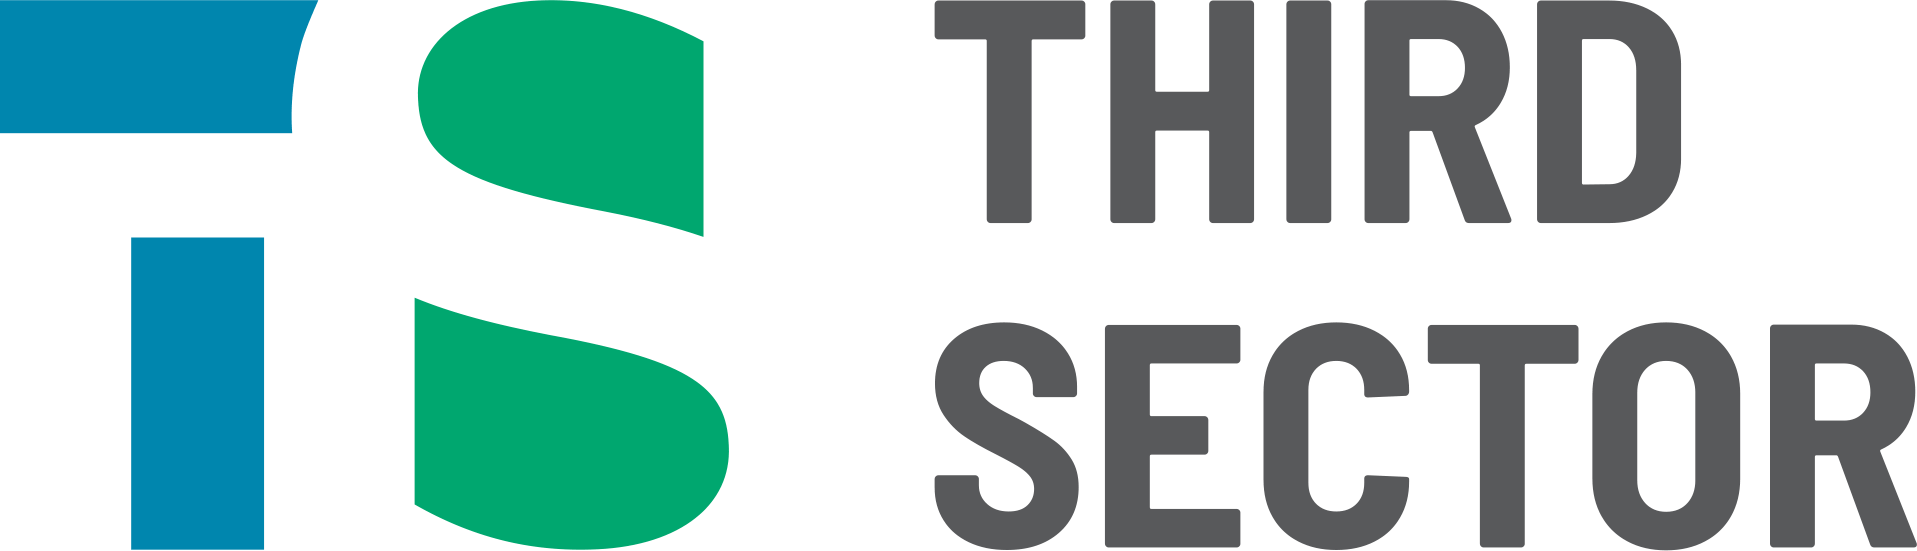 Third Sector Capital Partners logo